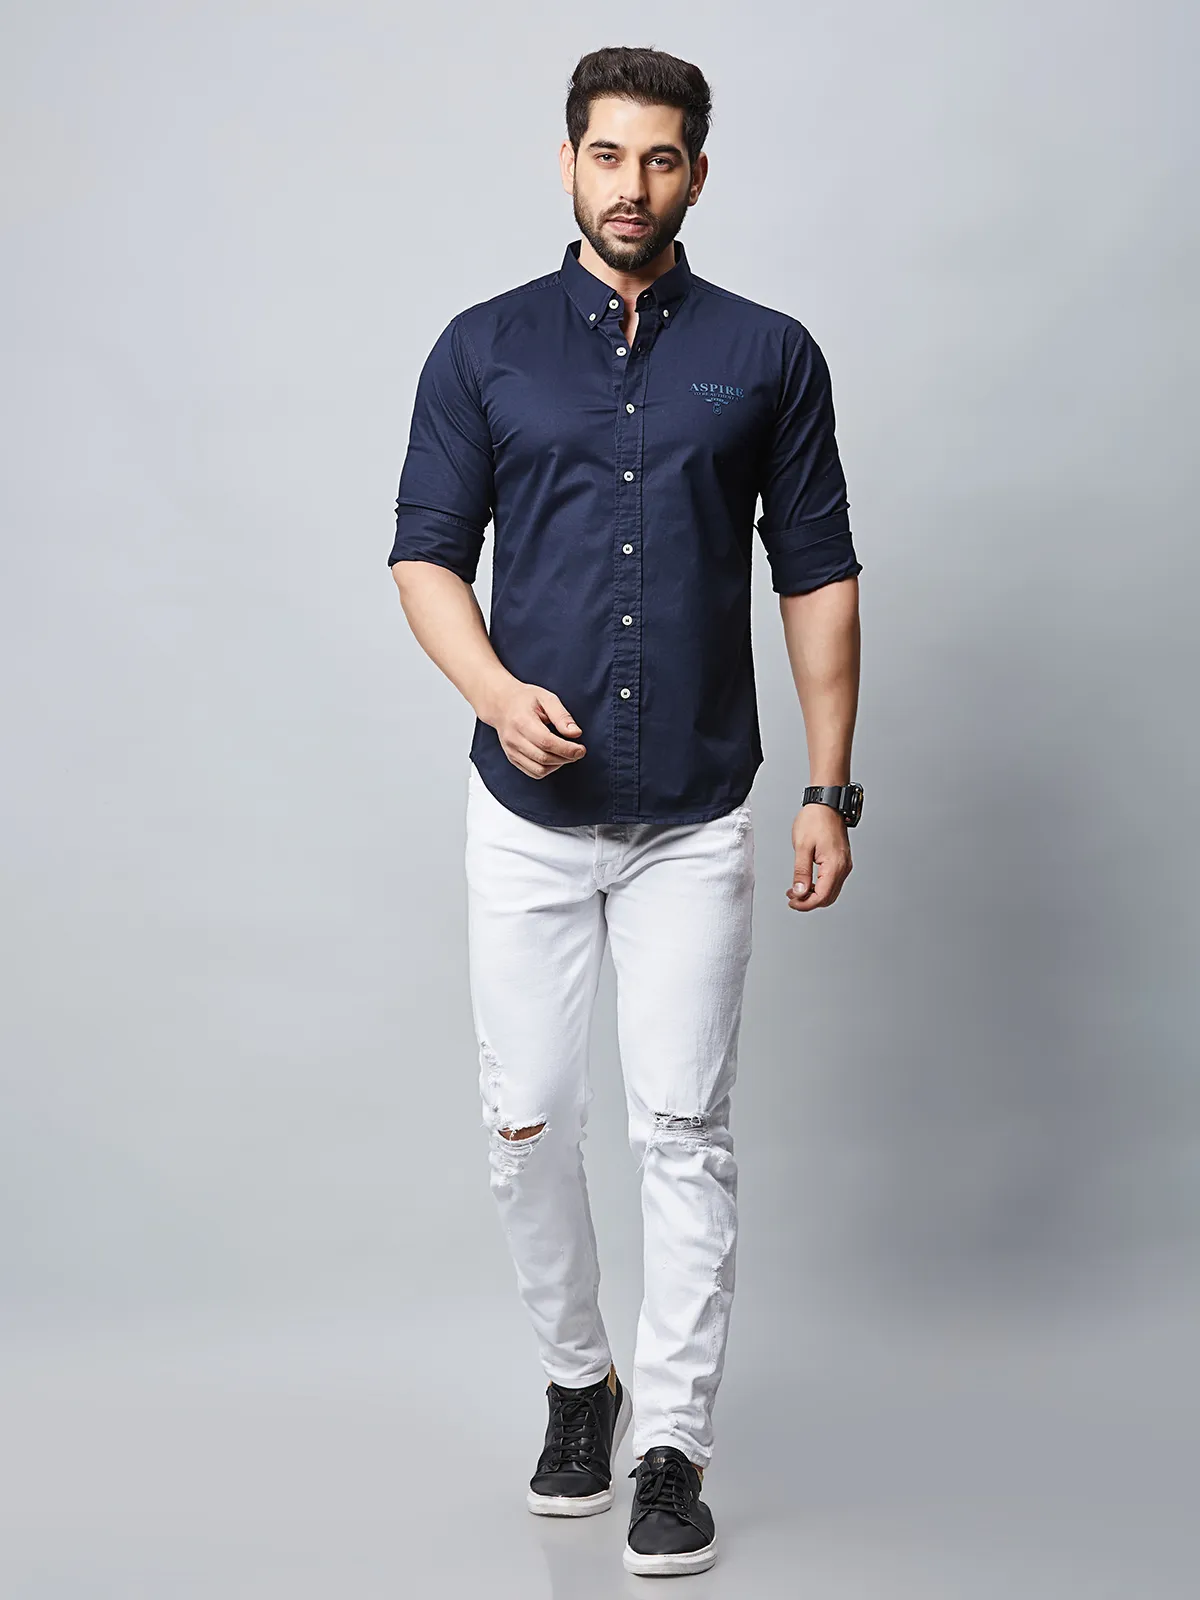 River Blue navy plain cotton shirt